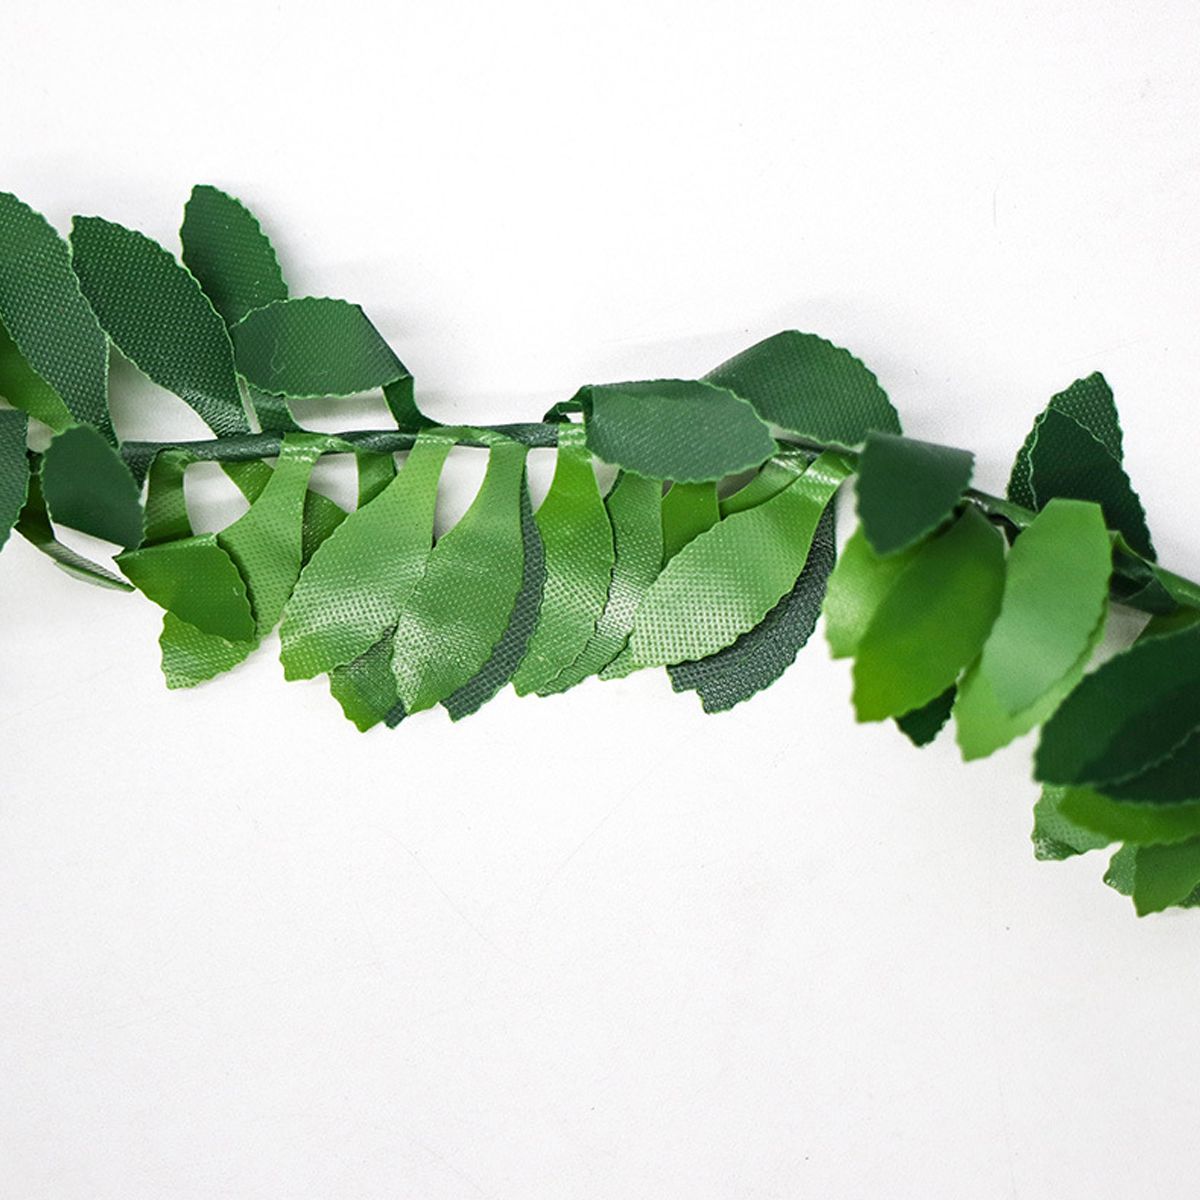 295-Inch-Ivy-Leaf-Garland-Green-Plant-Plastic-Vine-Foliage-Plastic-Iron-Wire-Decor-1694280